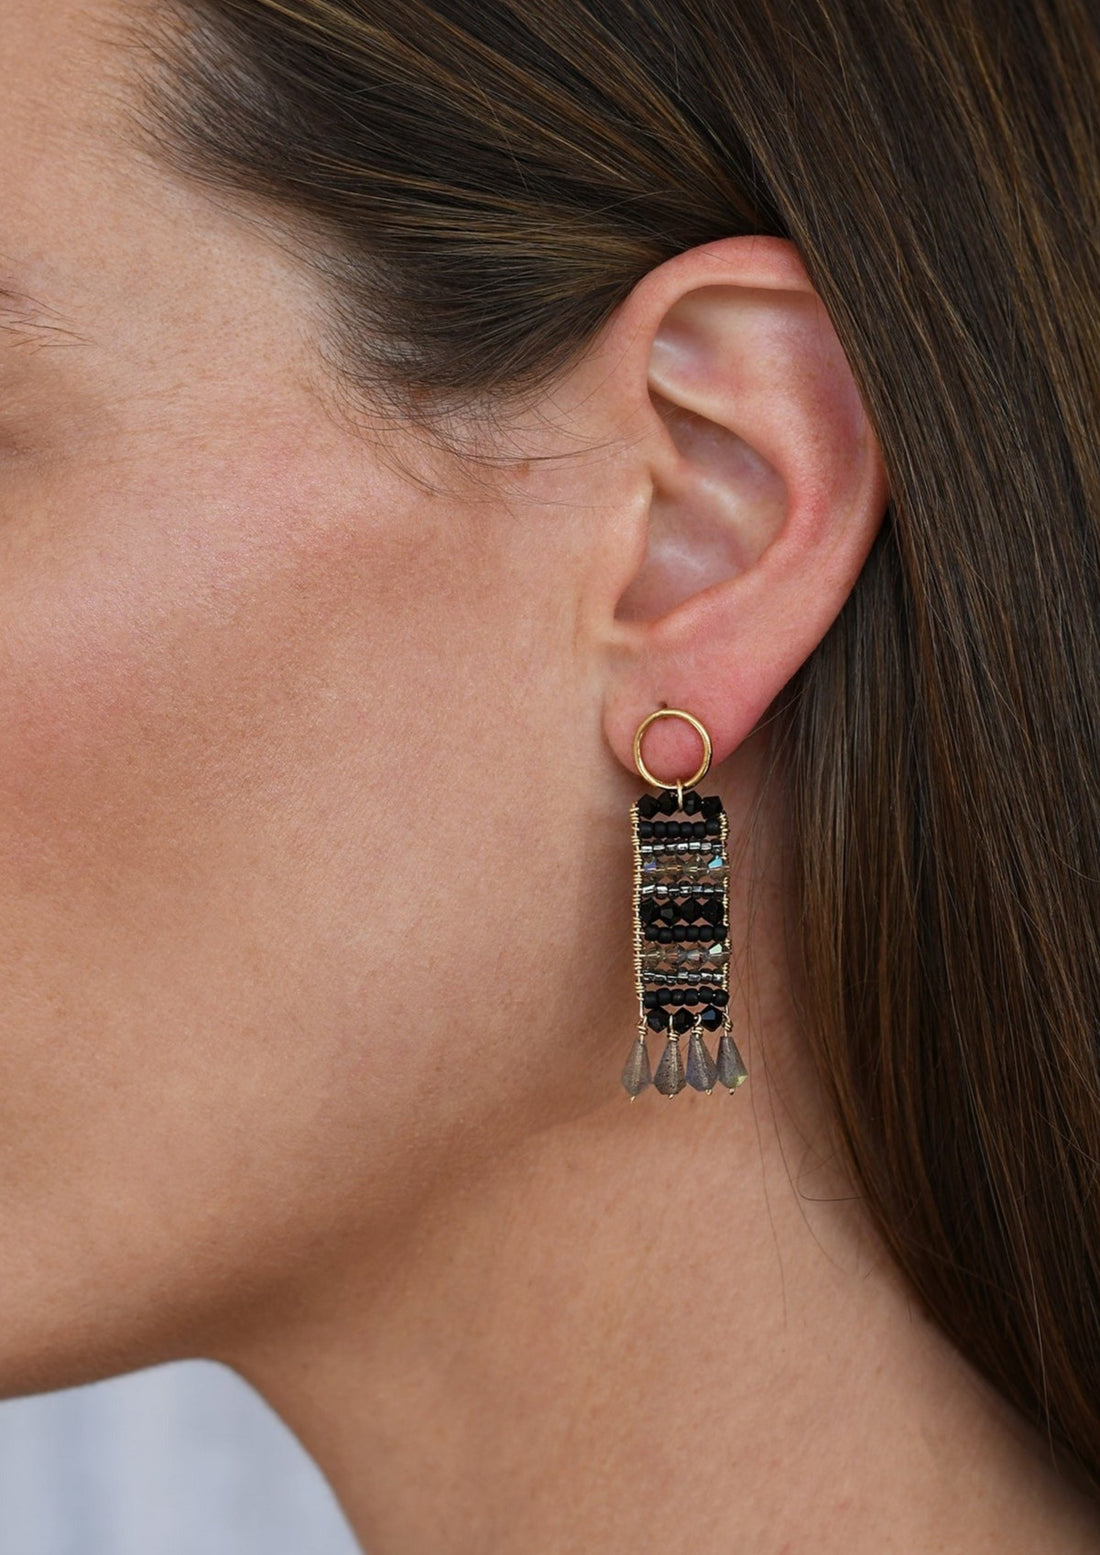 Semi Precious Beaded Pendant Earrings With Teardrops - SHINY GRAPHITE/BLACK/TRANSLUCENT GREY